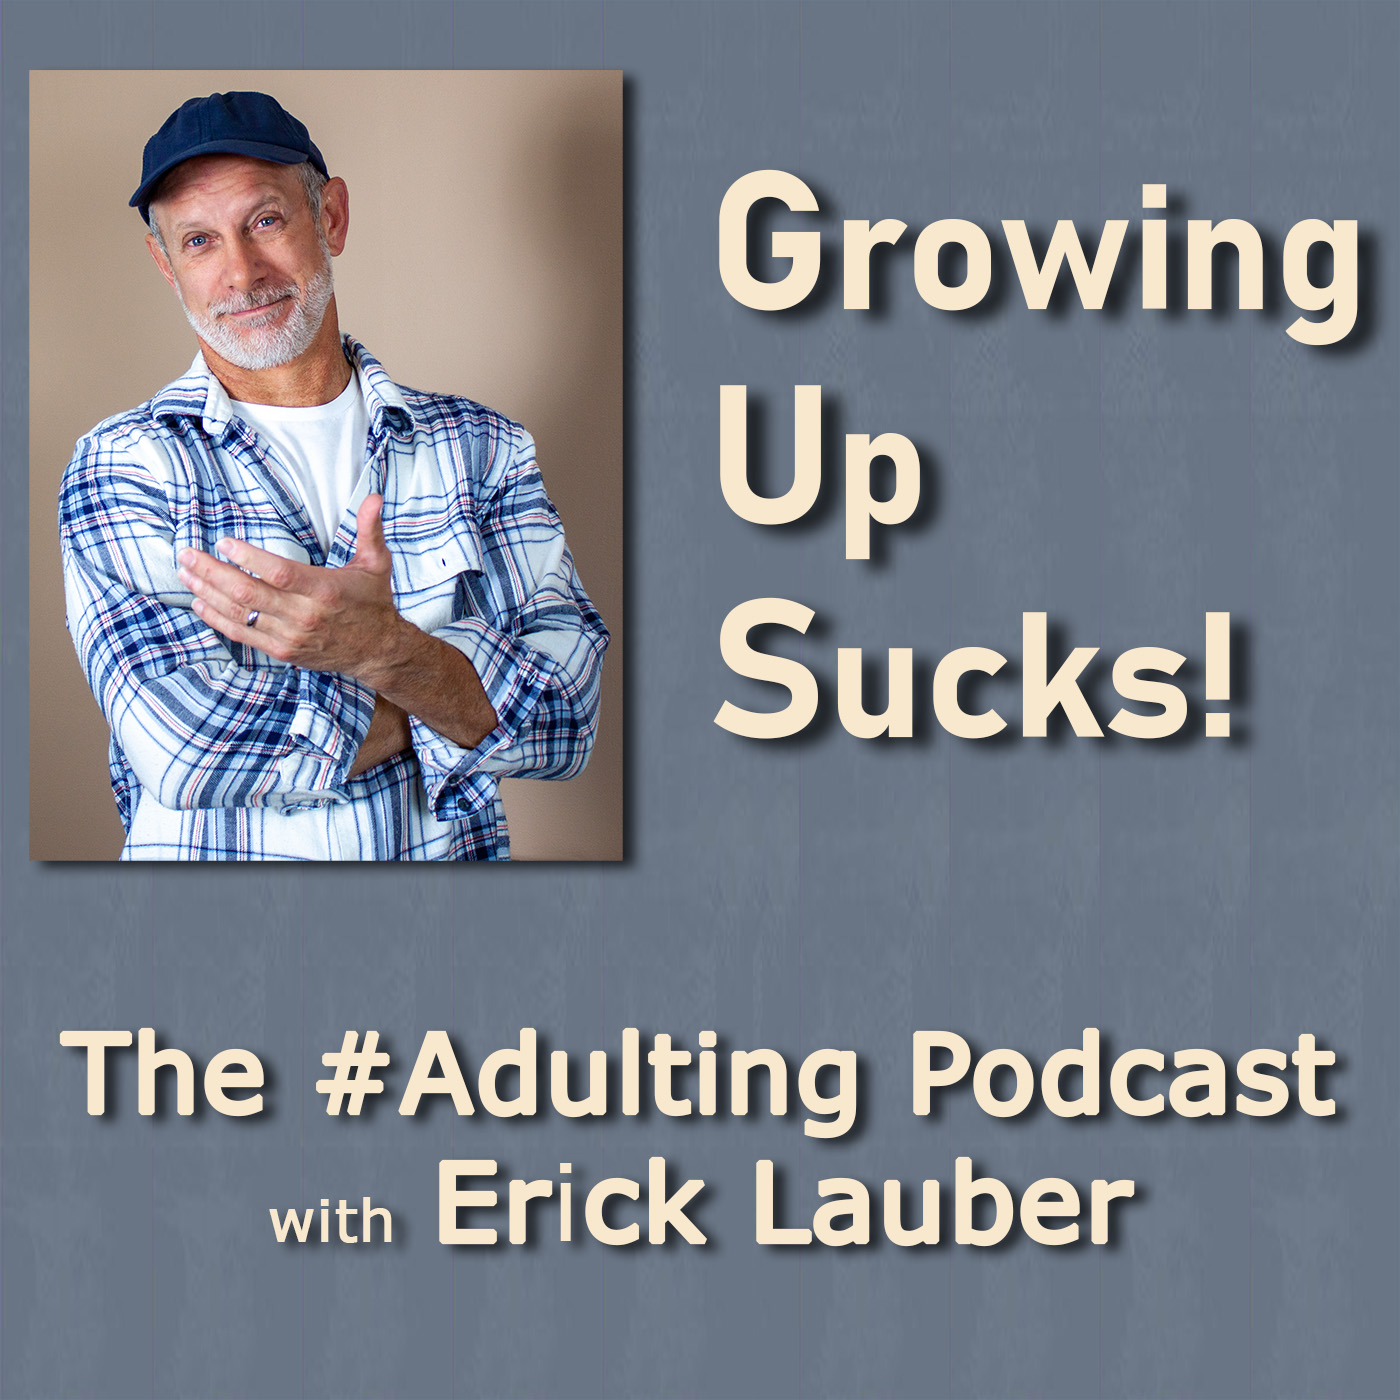 Growing Up Sucks! Podcast